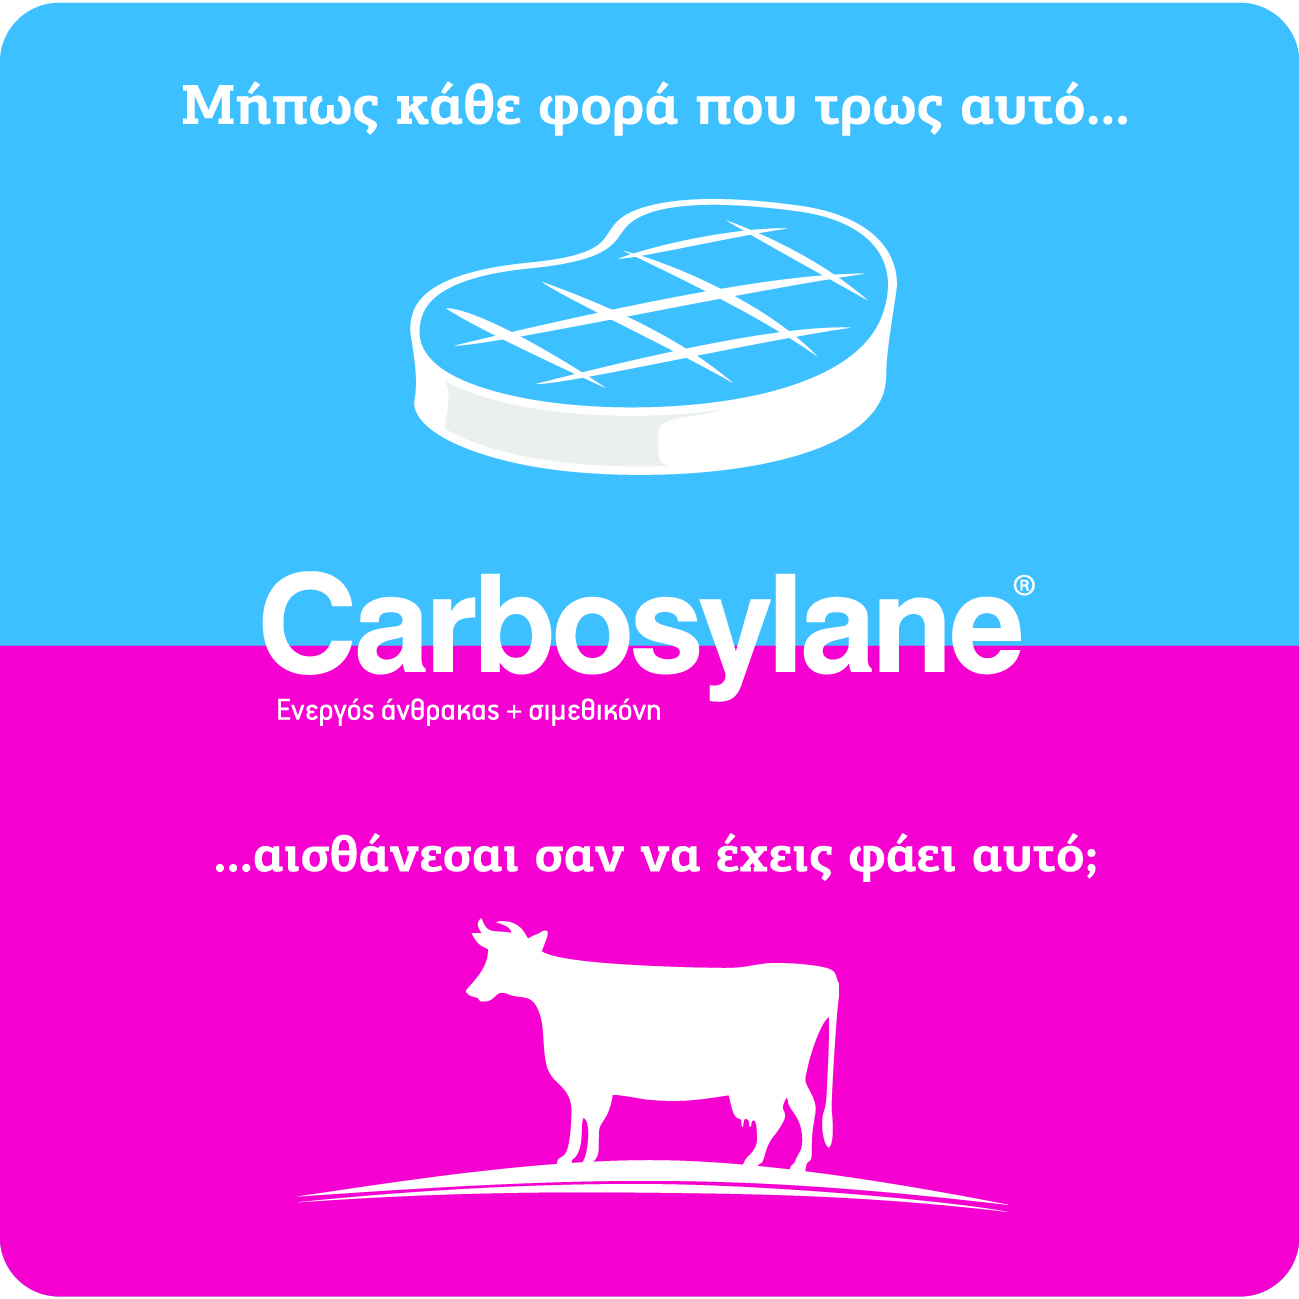 Carbosylane promo concept